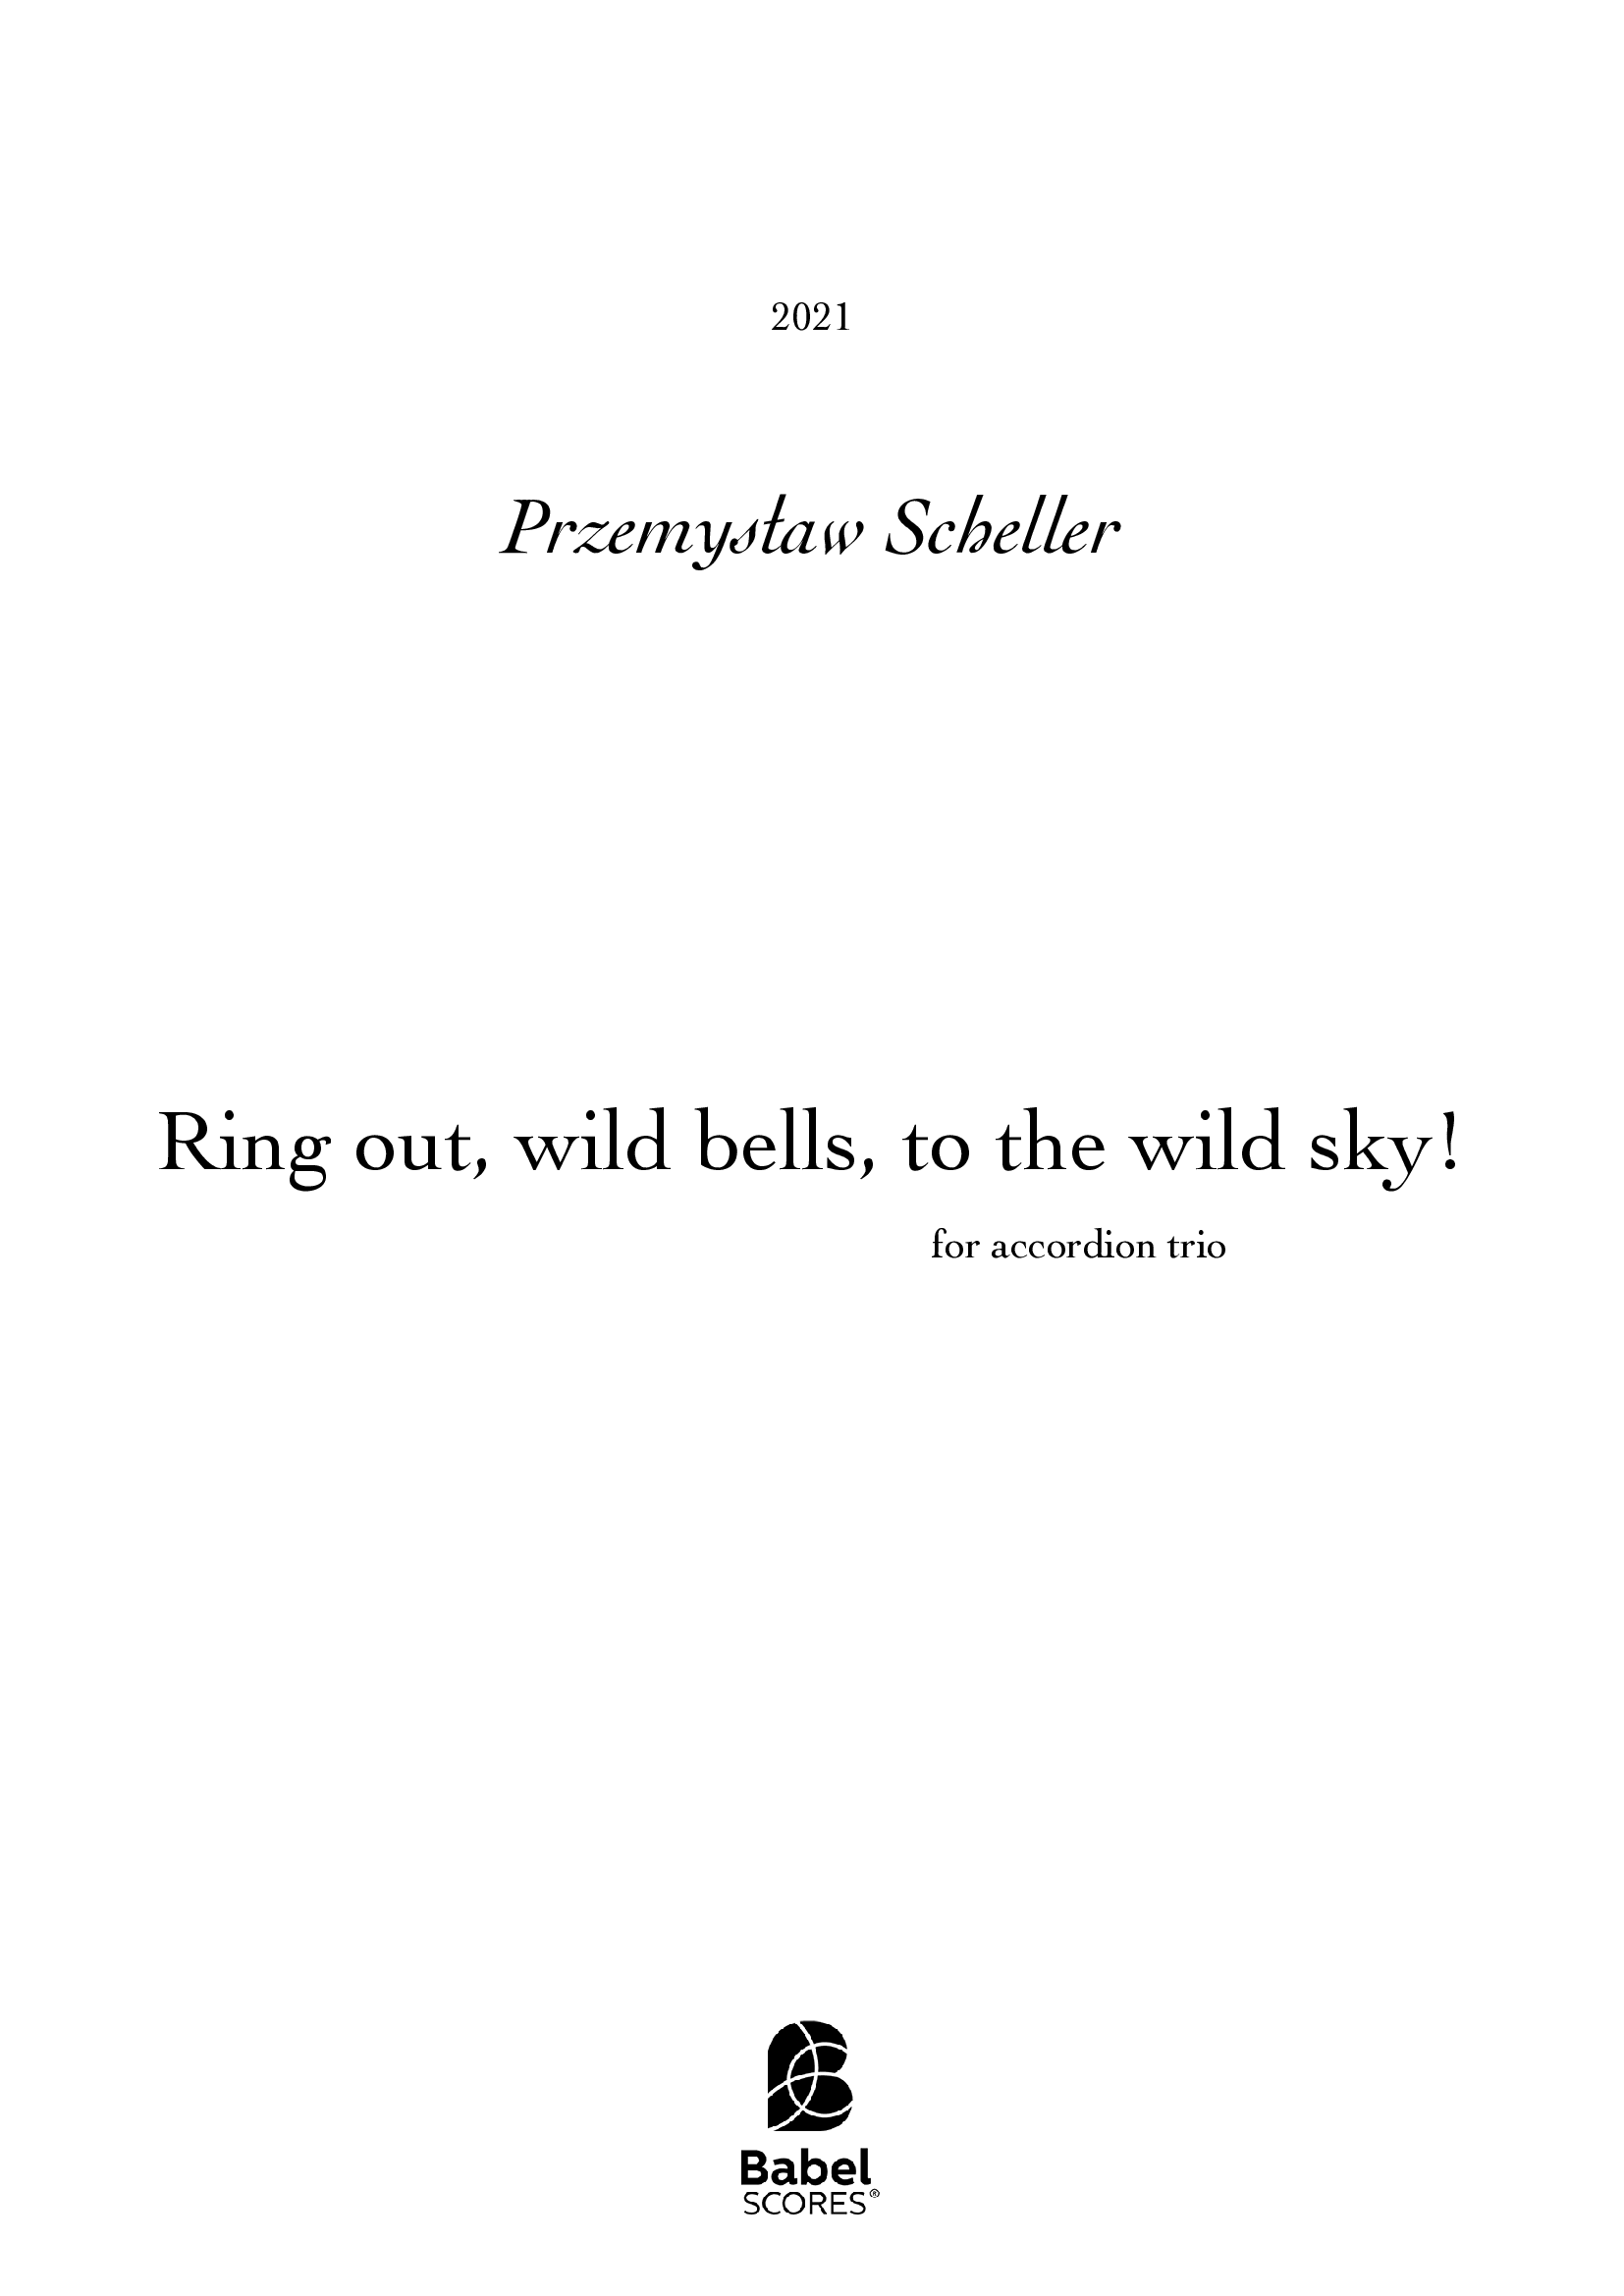 Ring Out, Wild Bells - Alfred, Lord Tennyson Poem - Literature - Typewriter  Print 2 - Black Duvet Cover by Studio Grafiikka - Fine Art America